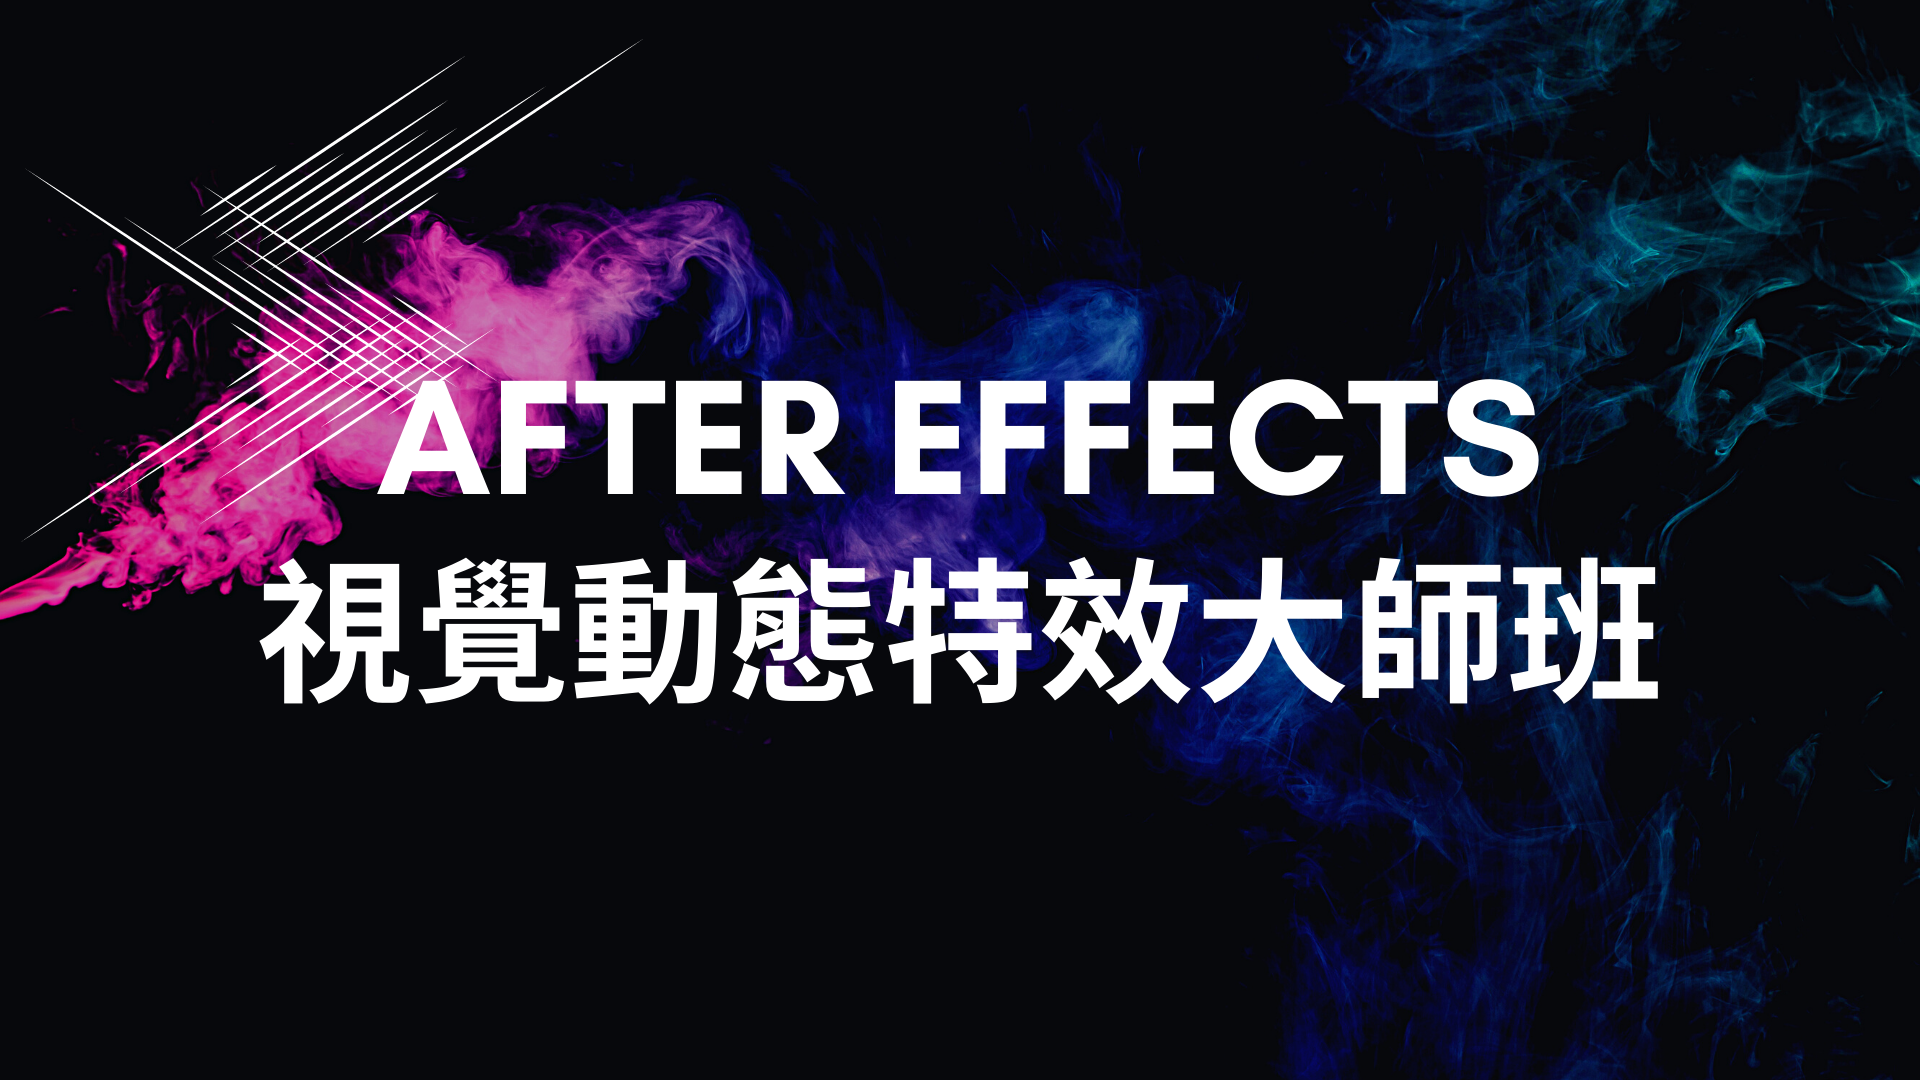 After Effects 視覺＆動態特效大師班